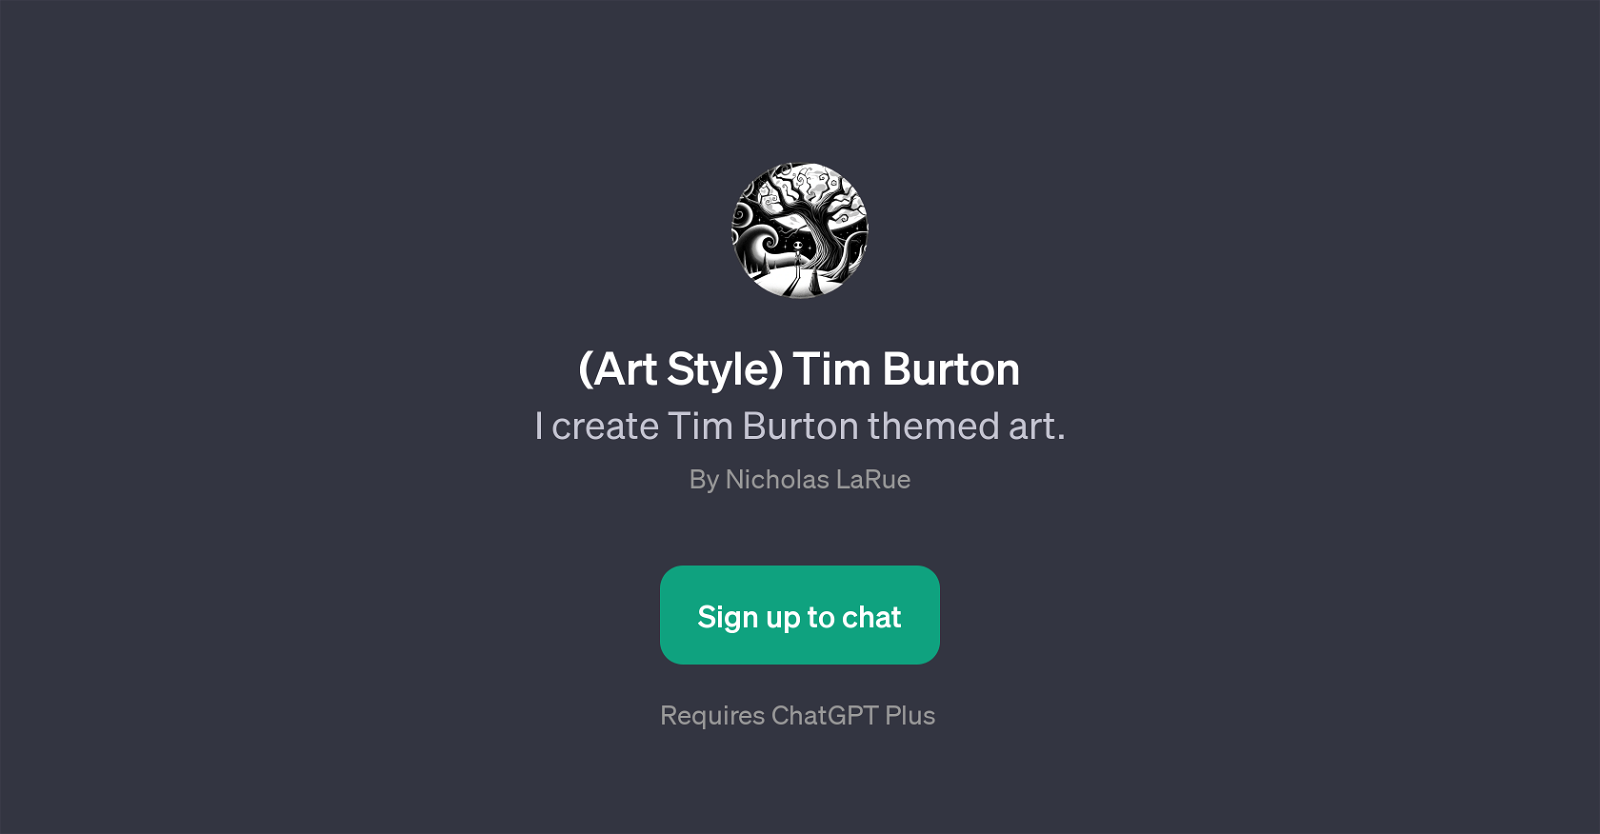 (Art Style) Tim Burton website